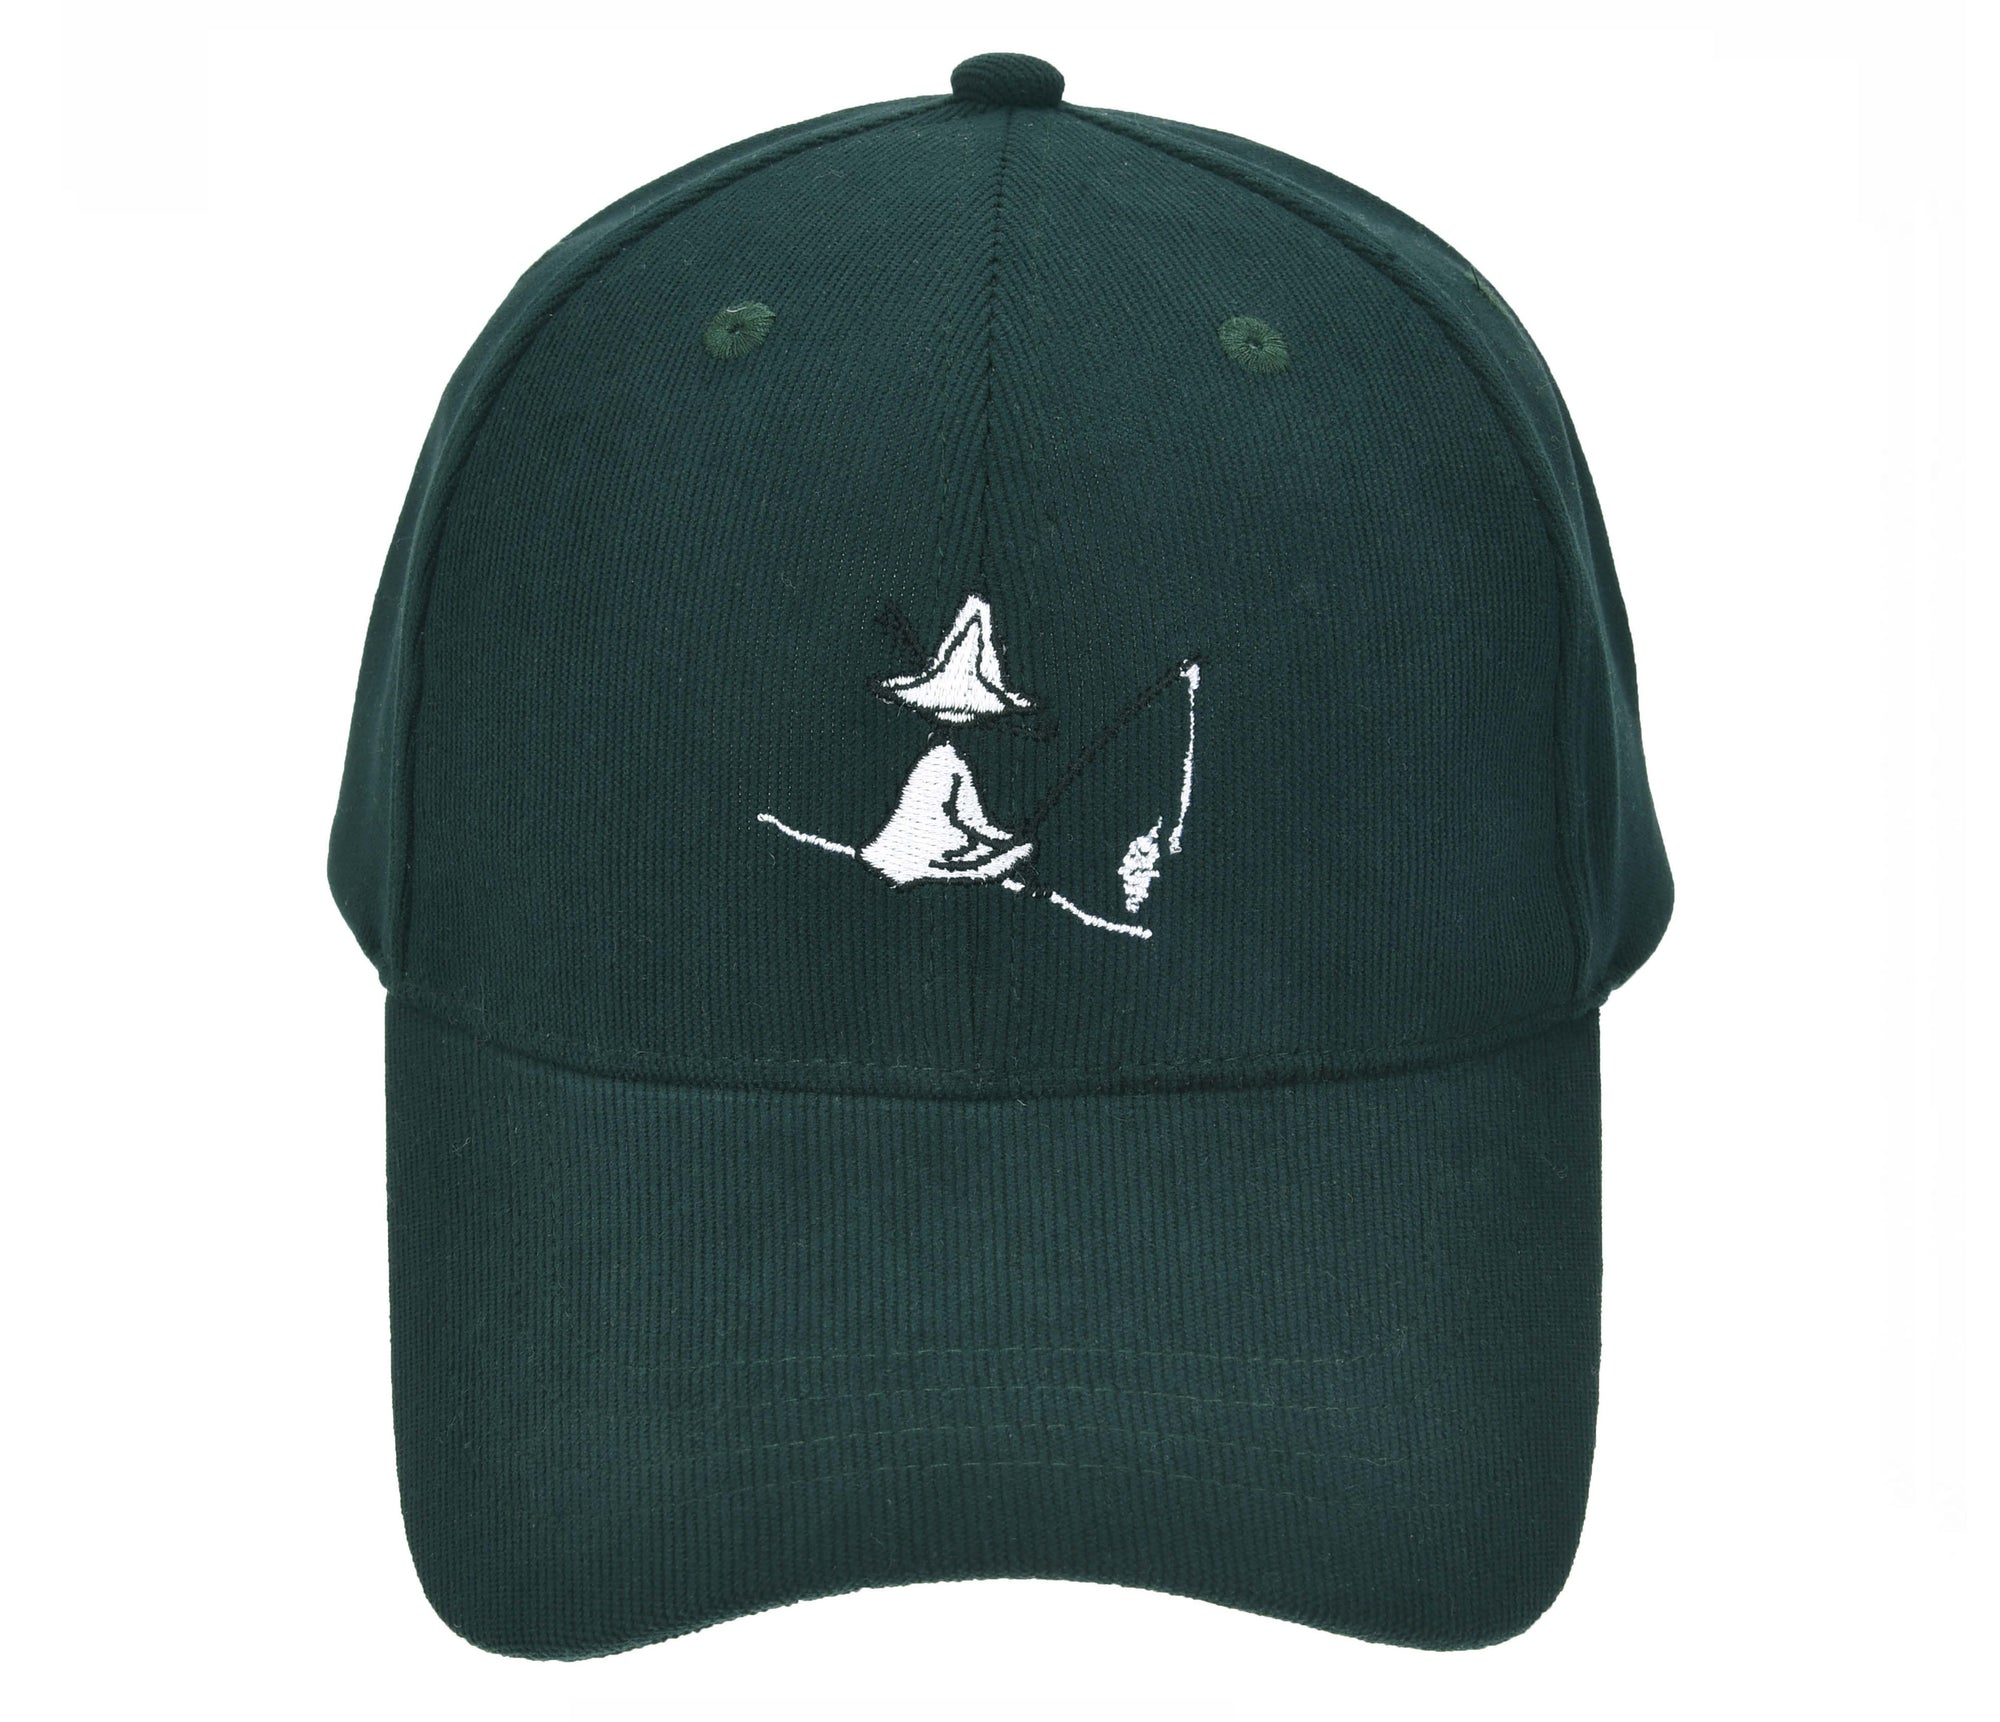 [Moomin] Snufkin corduroy cap green